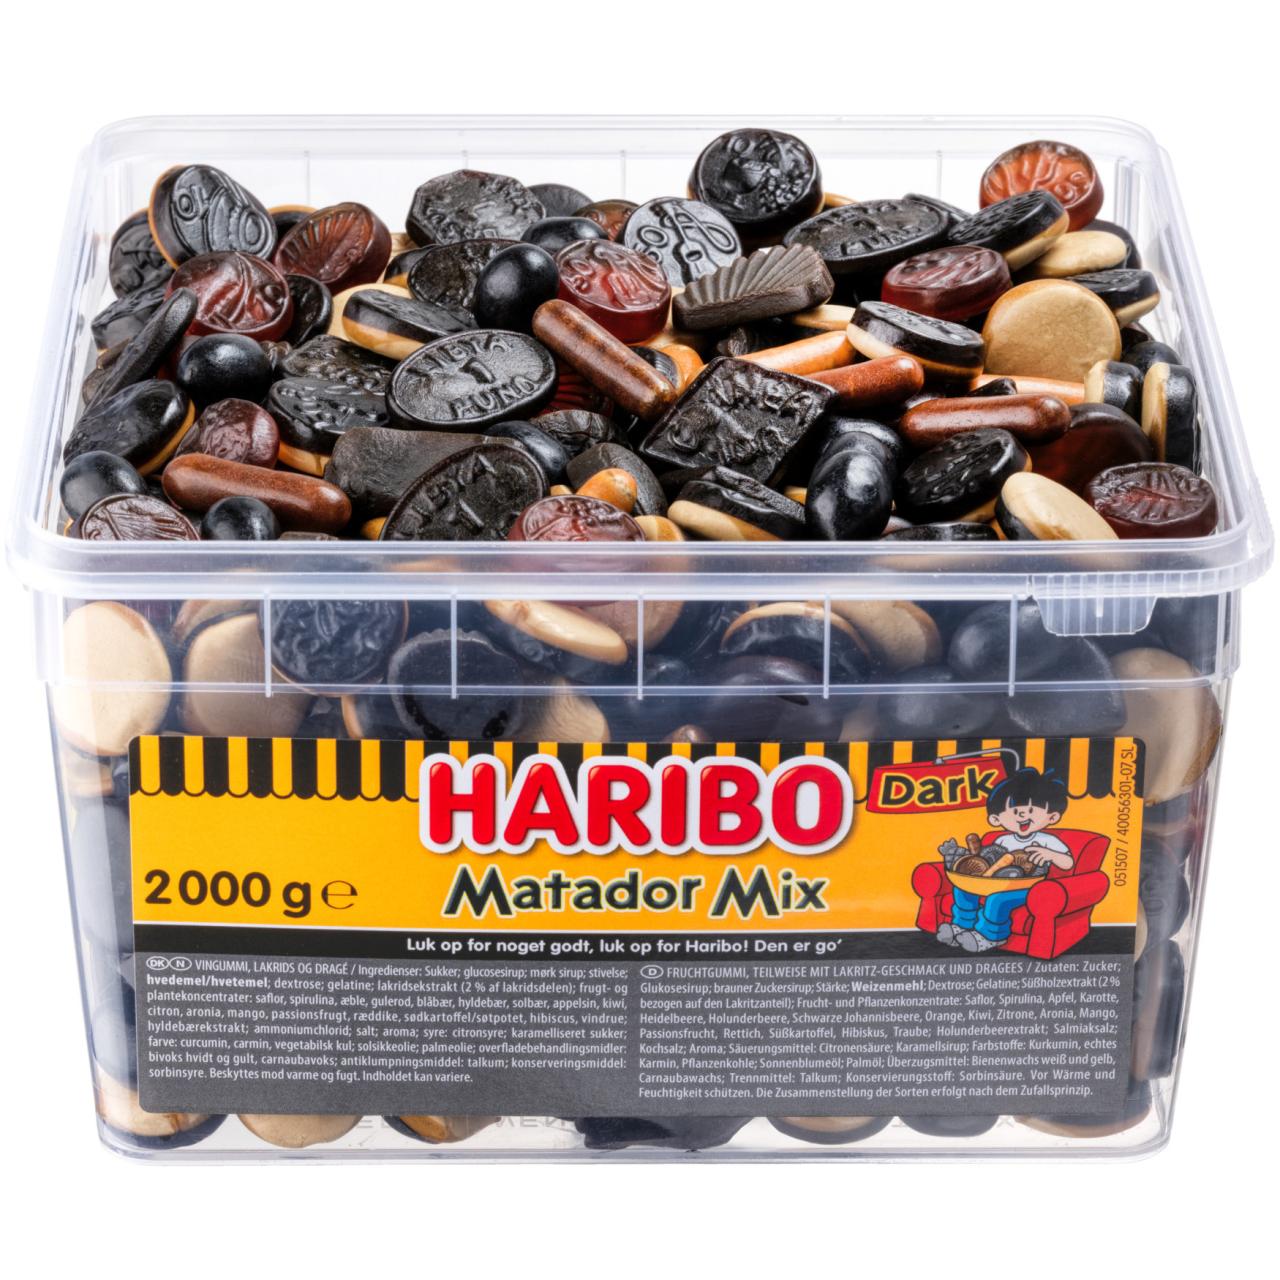 Haribo Matador Mix Dark 2000g